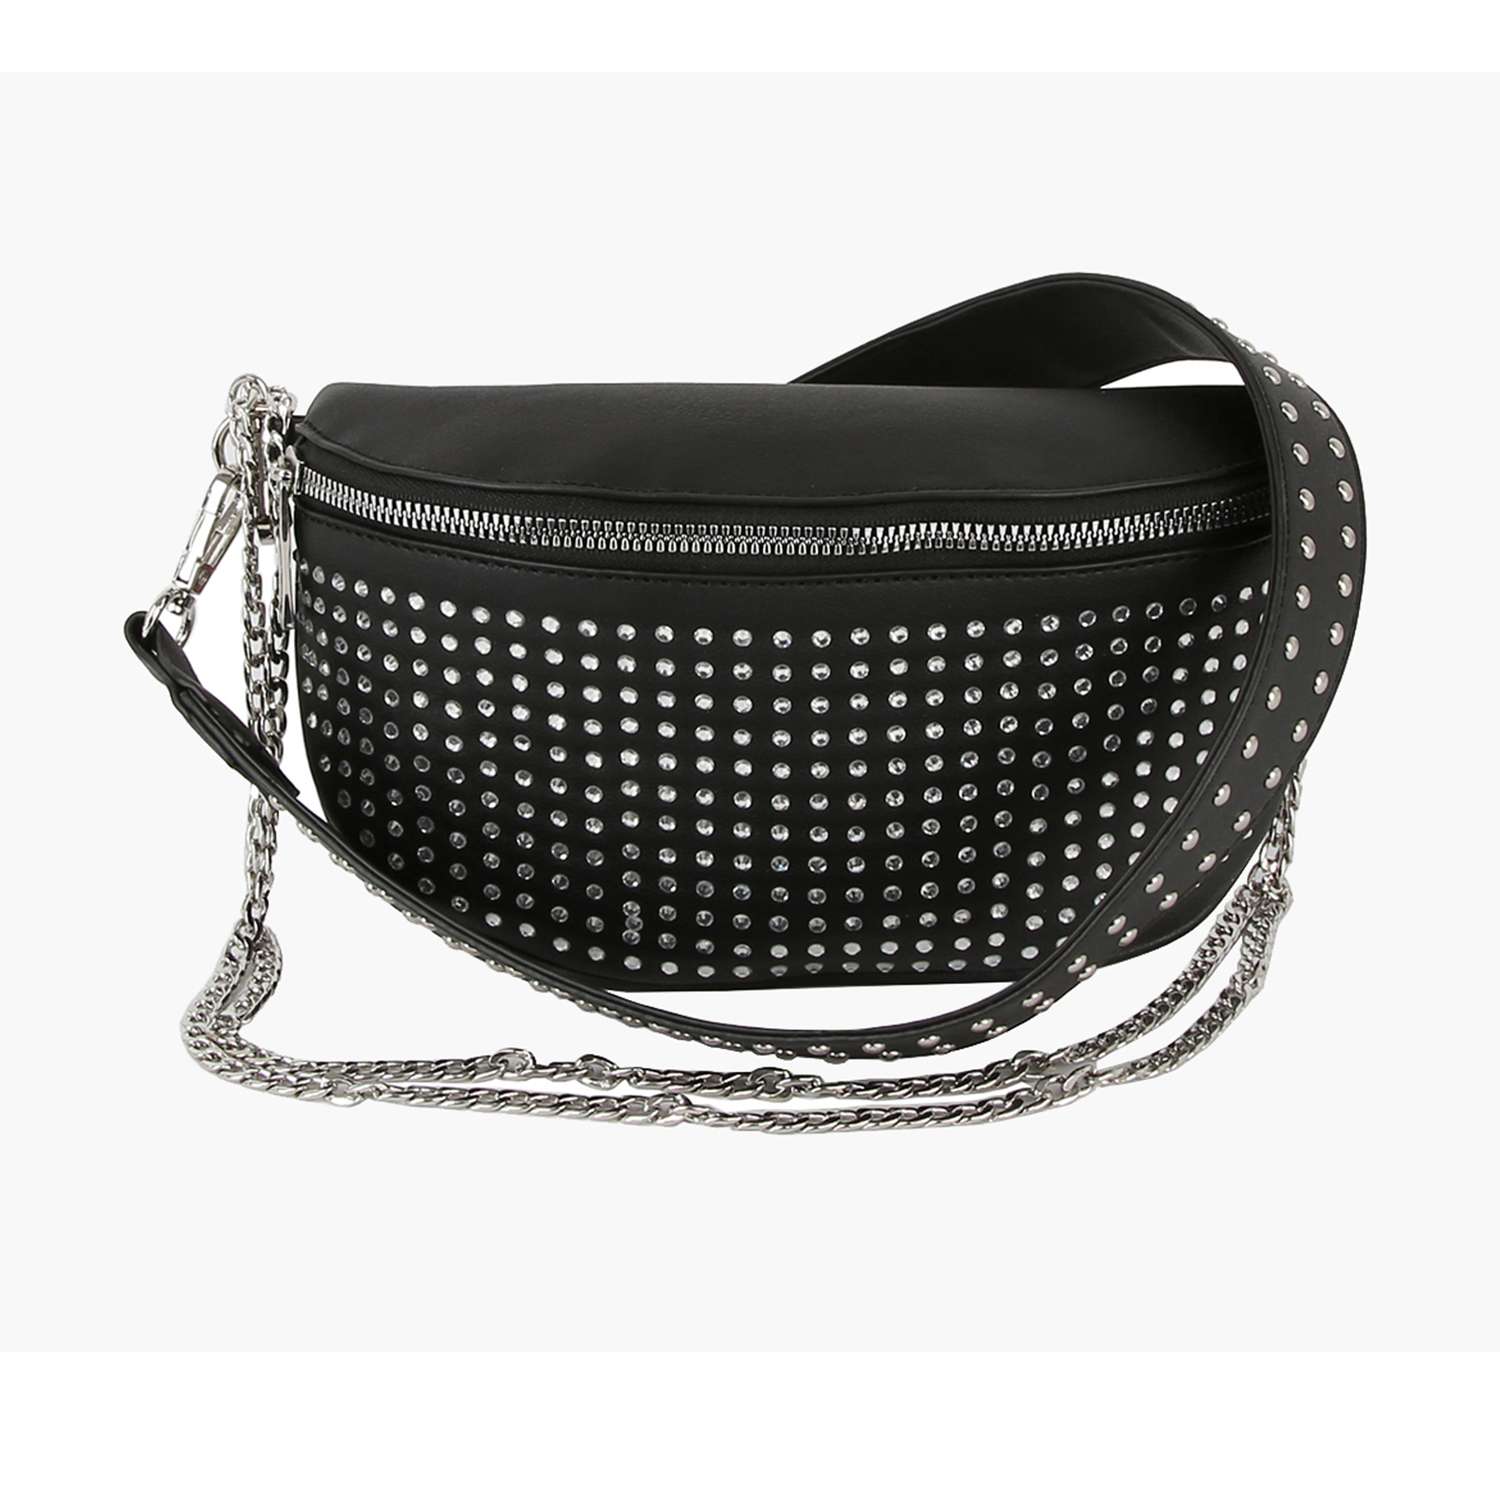 Stylish Studded Crossbody Bag: Pewter - Coco and lulu boutique 